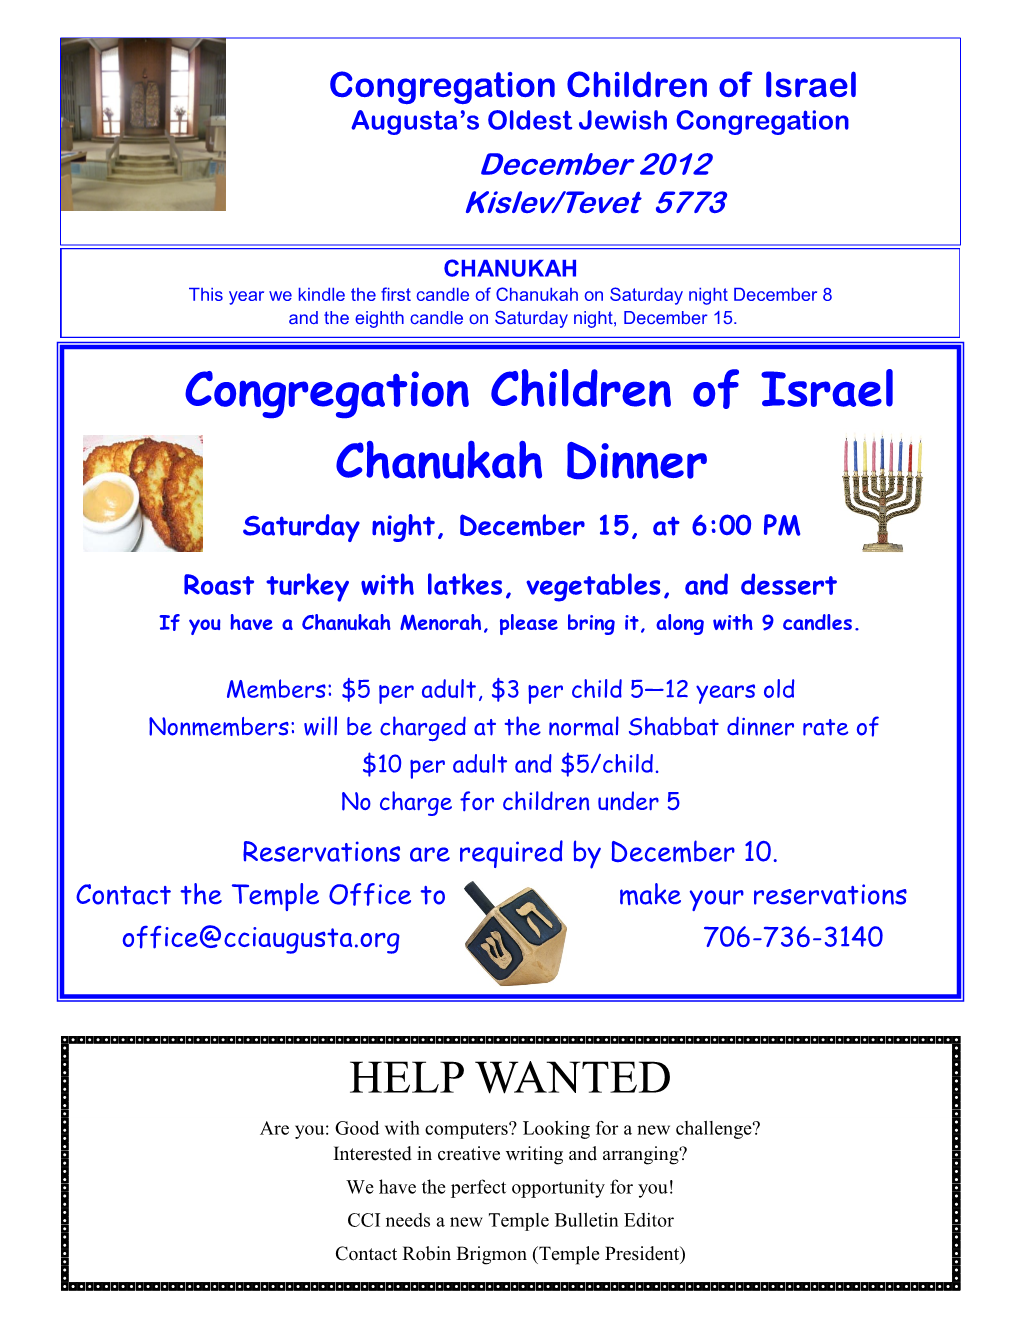 Congregation Children of Israel Chanukah Dinner HELP WANTED